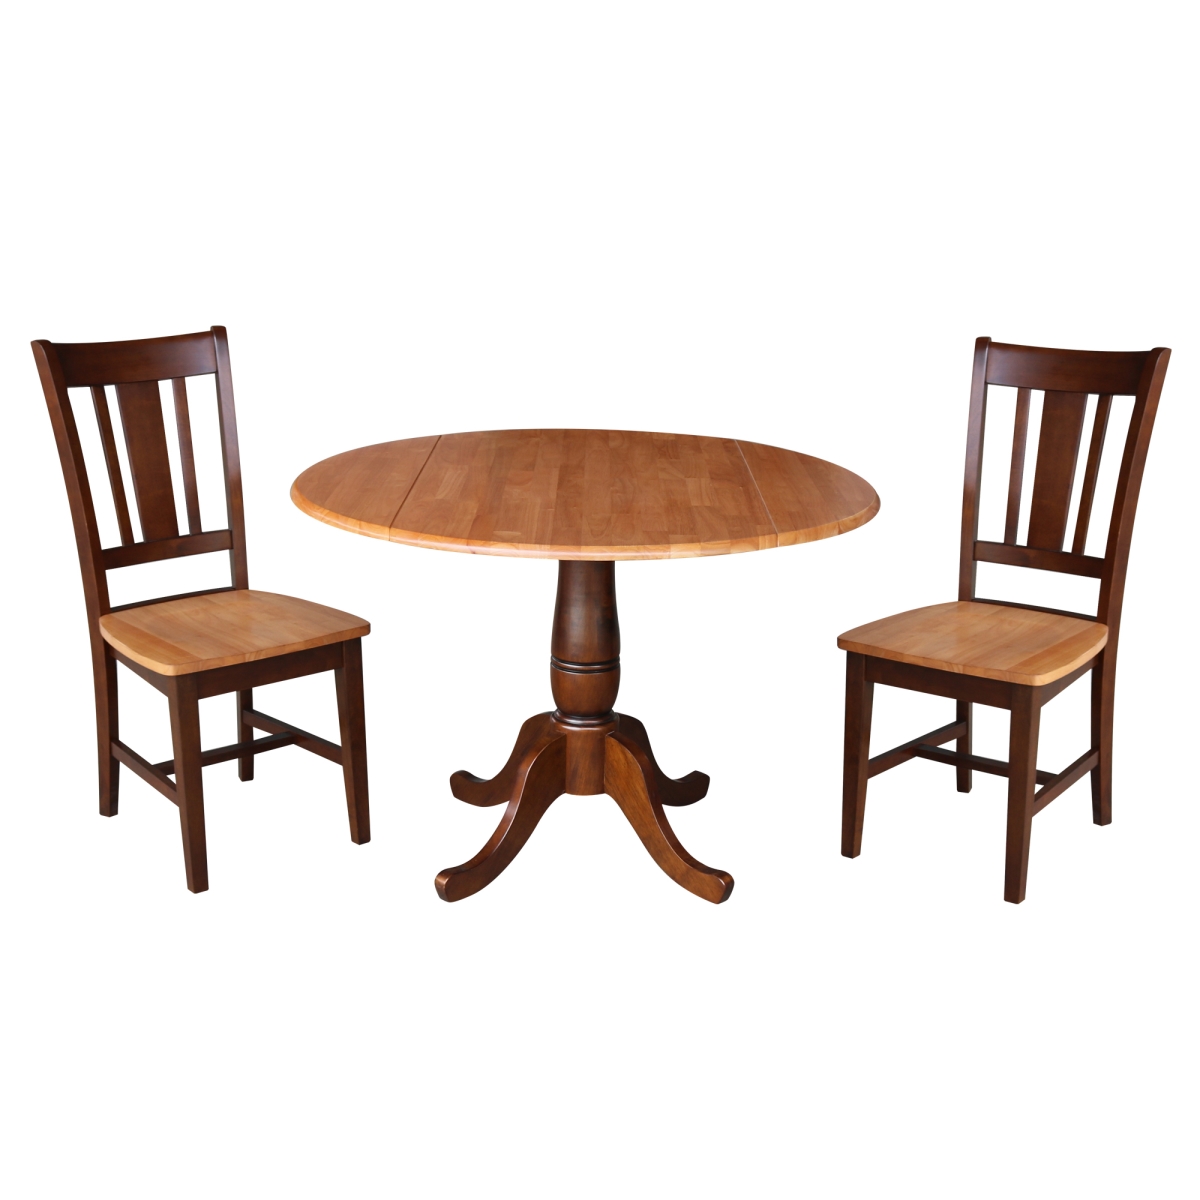 K58-42dpt-c10-2 42 In. Round Top Pedestal Table With 2 Chairs - Cinnemon & Espresso